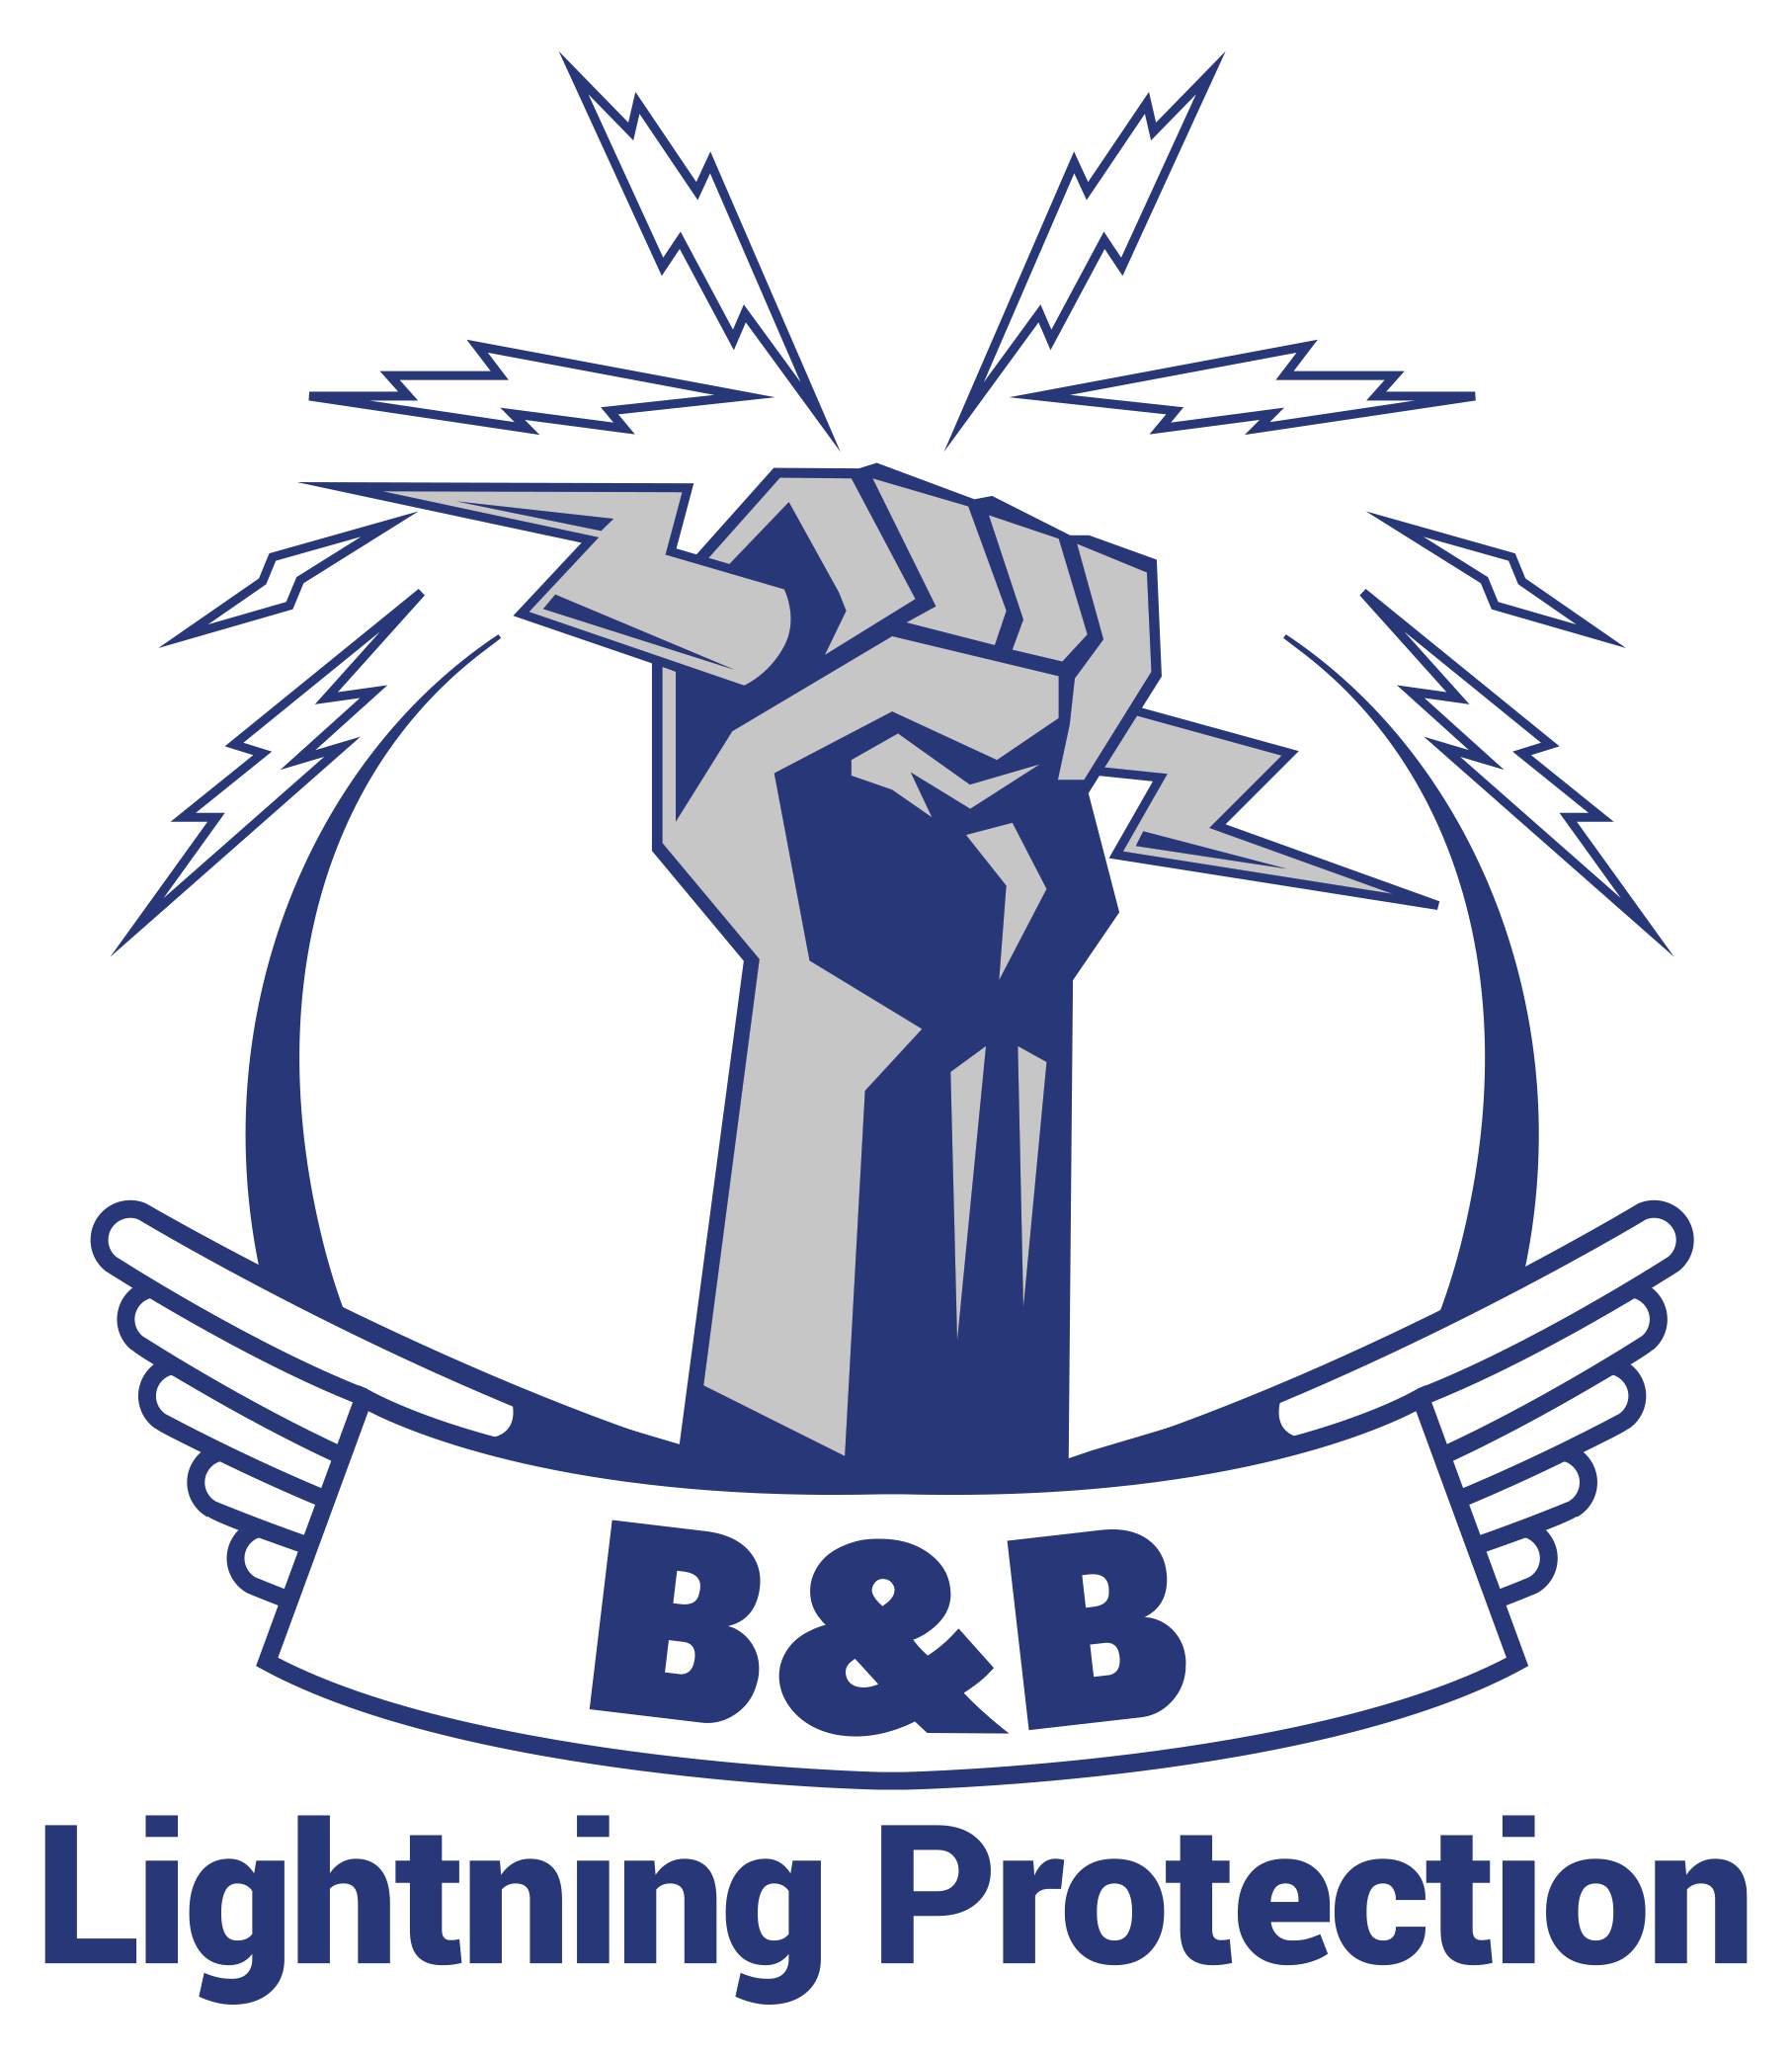 B&B Lightning Protection